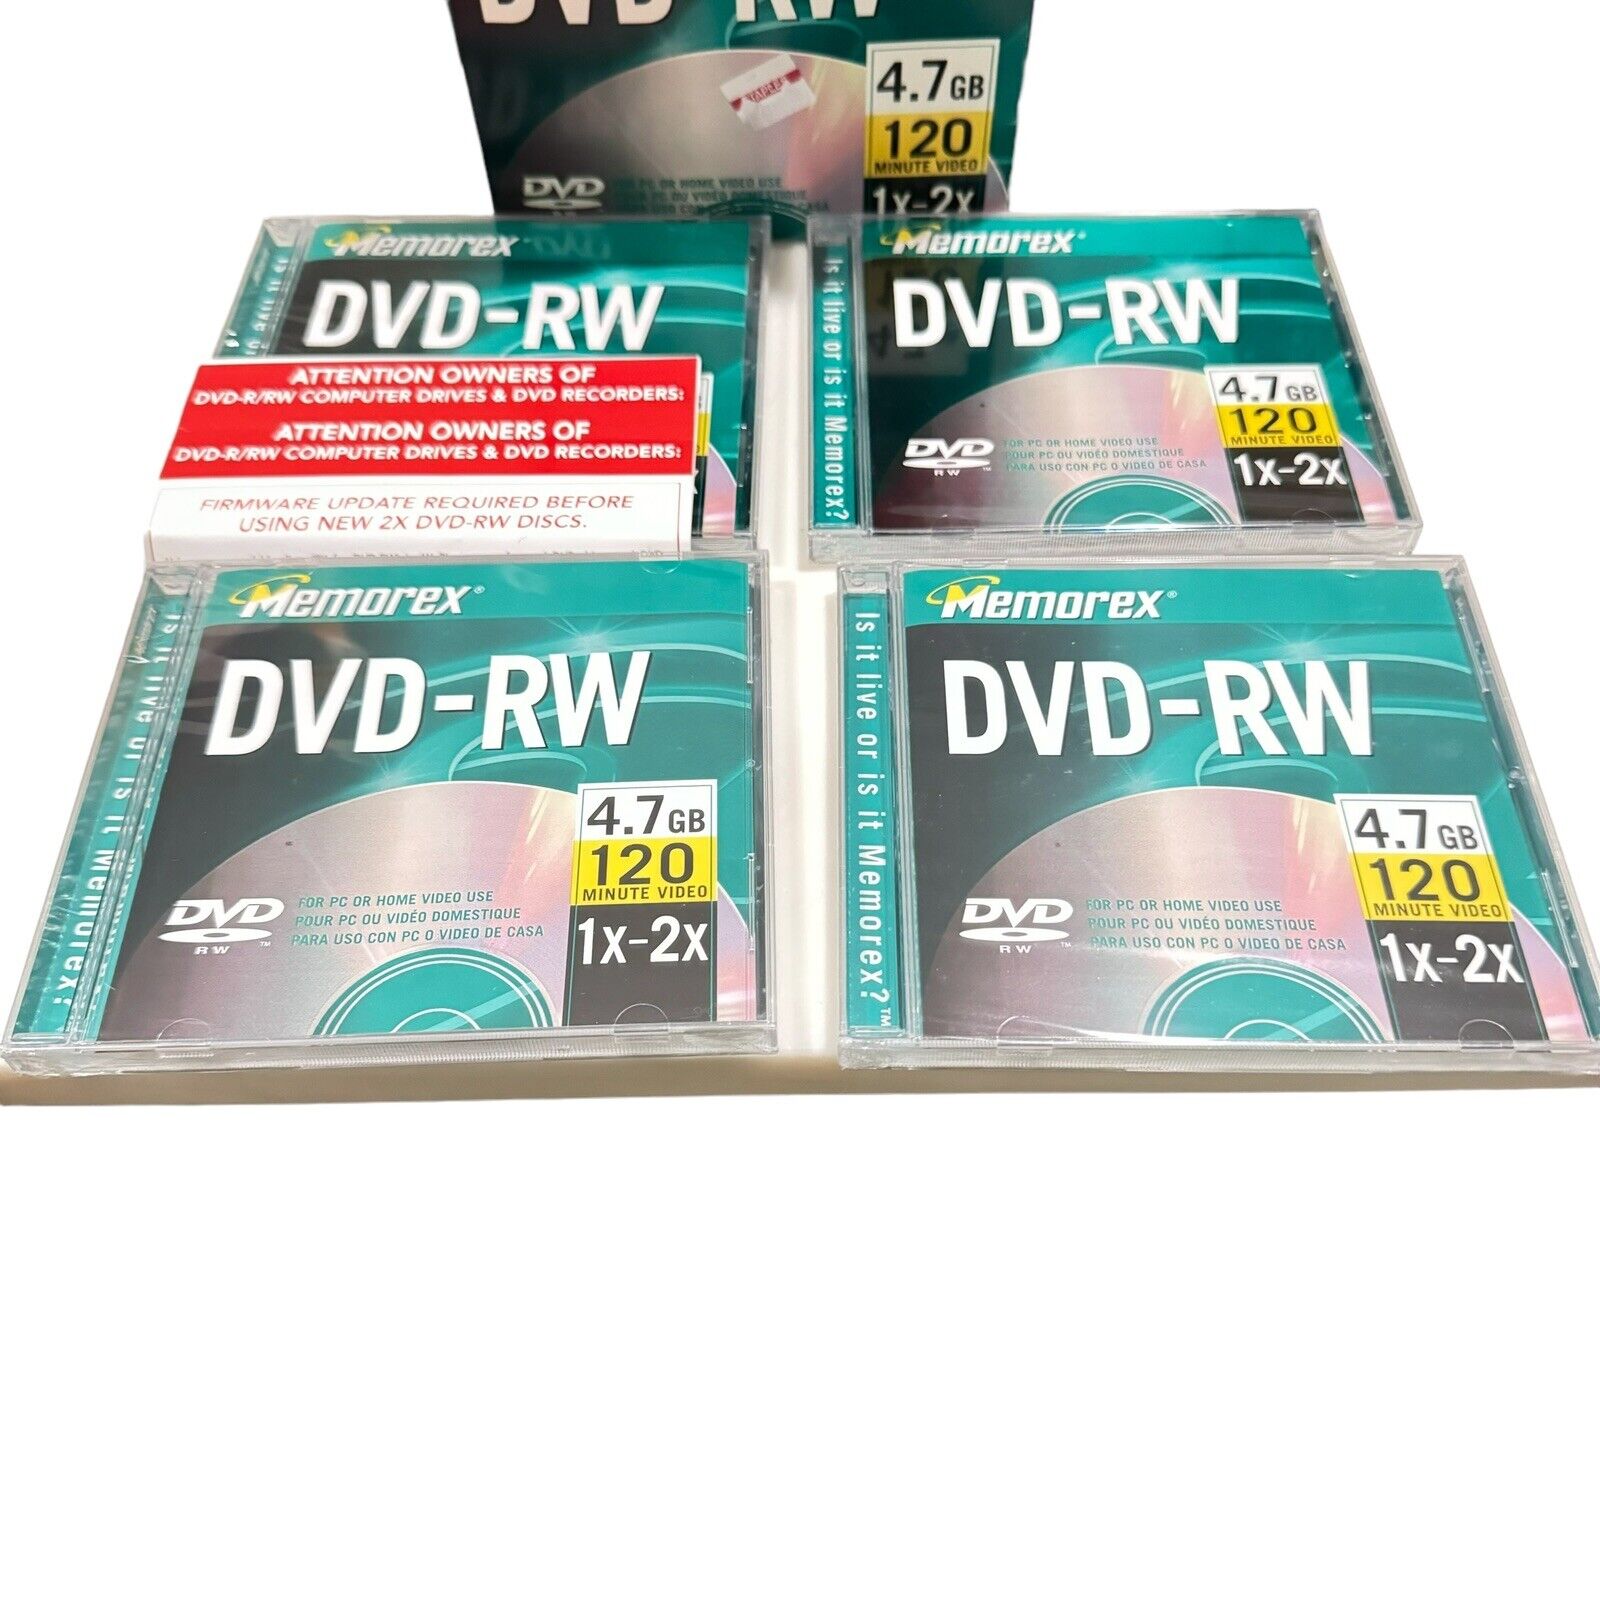 Memorex DVD-RW 1x 2x 4.7GB 120Mins 4-pack Sealed Discs Open Box